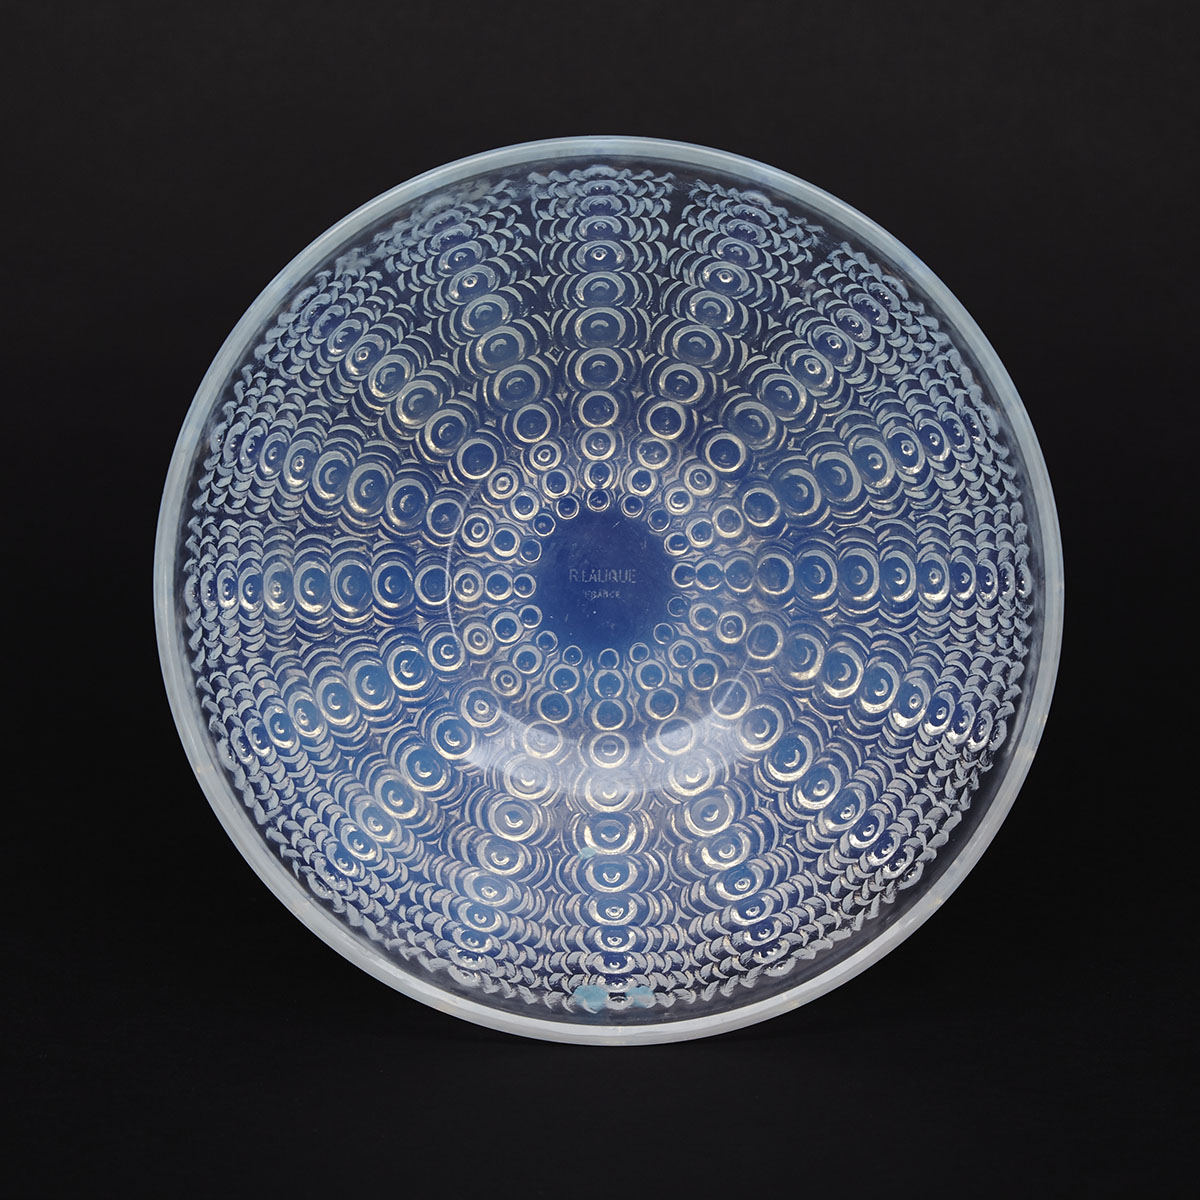 ‘Oursins’, Lalique Moulded Opalescent Glass Bowl, 1930s